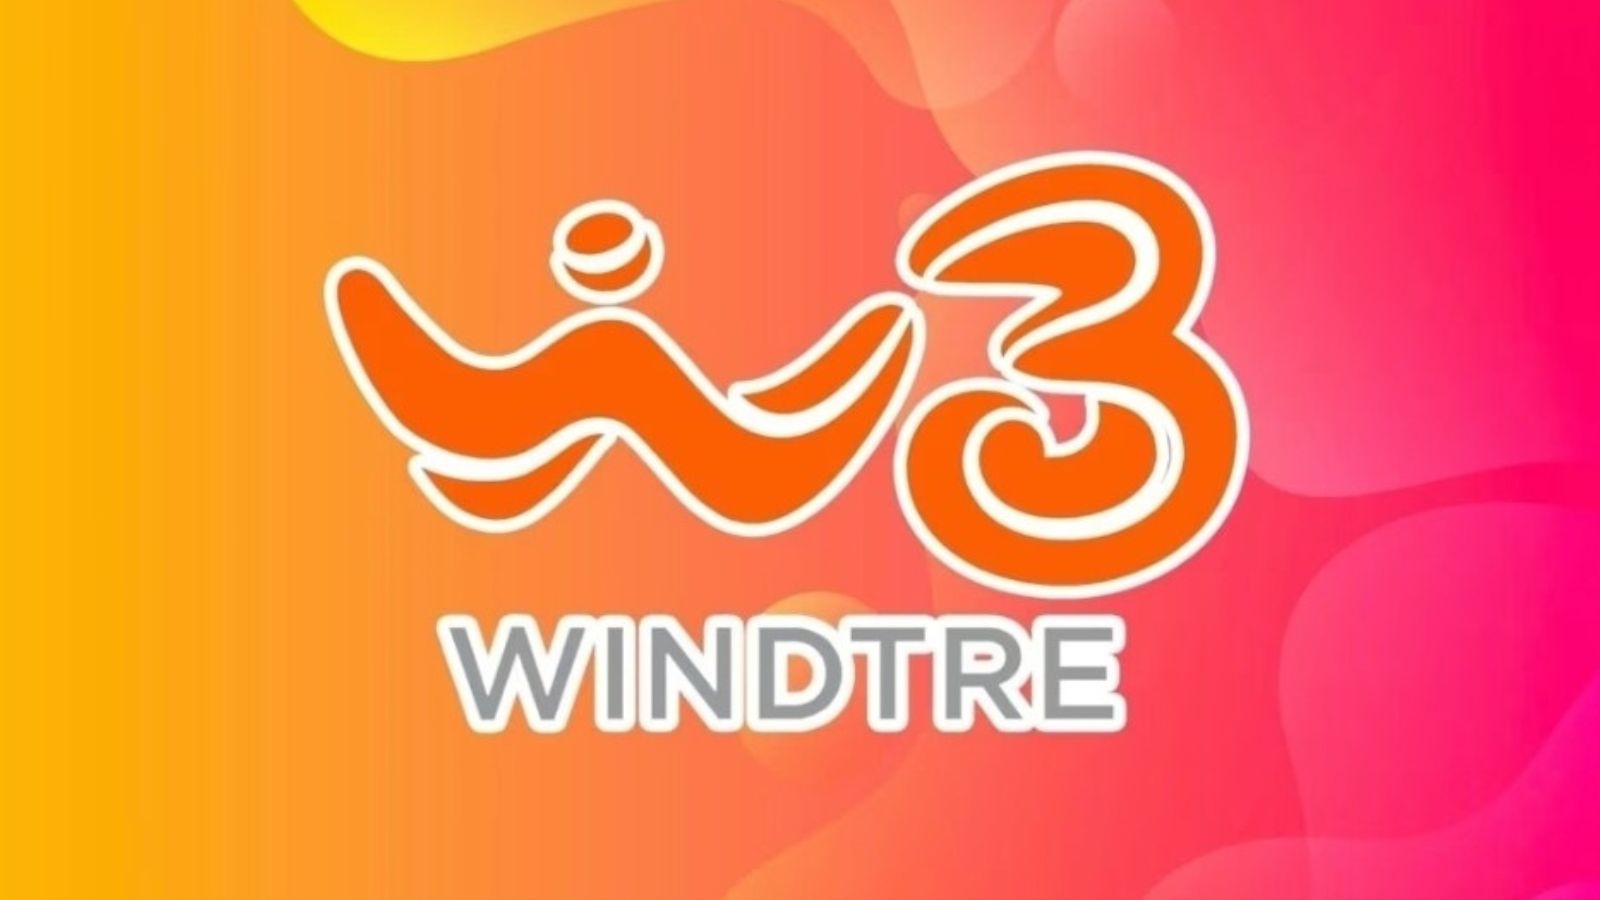 WindTre nuove offerte under 14